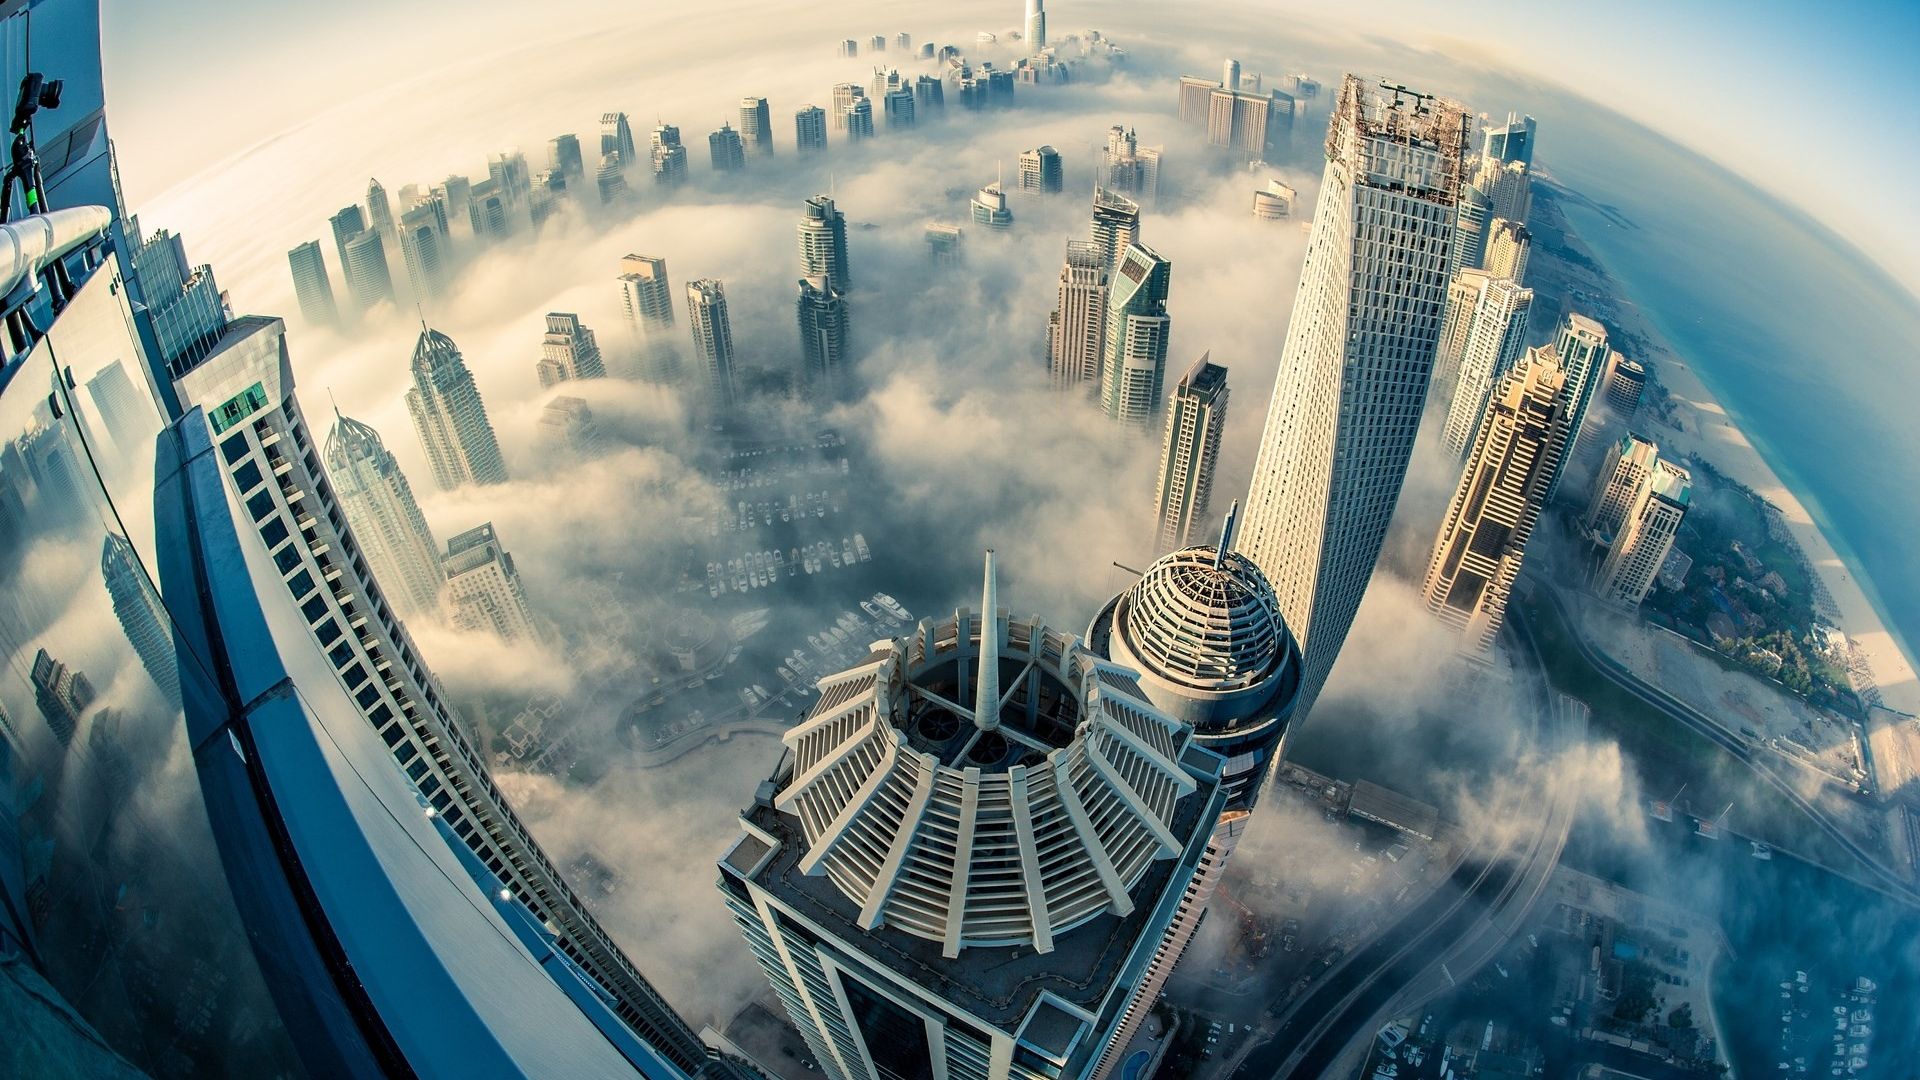 Dubai Towers And Cityscapes HD Wallpaper FullHDwpp Full